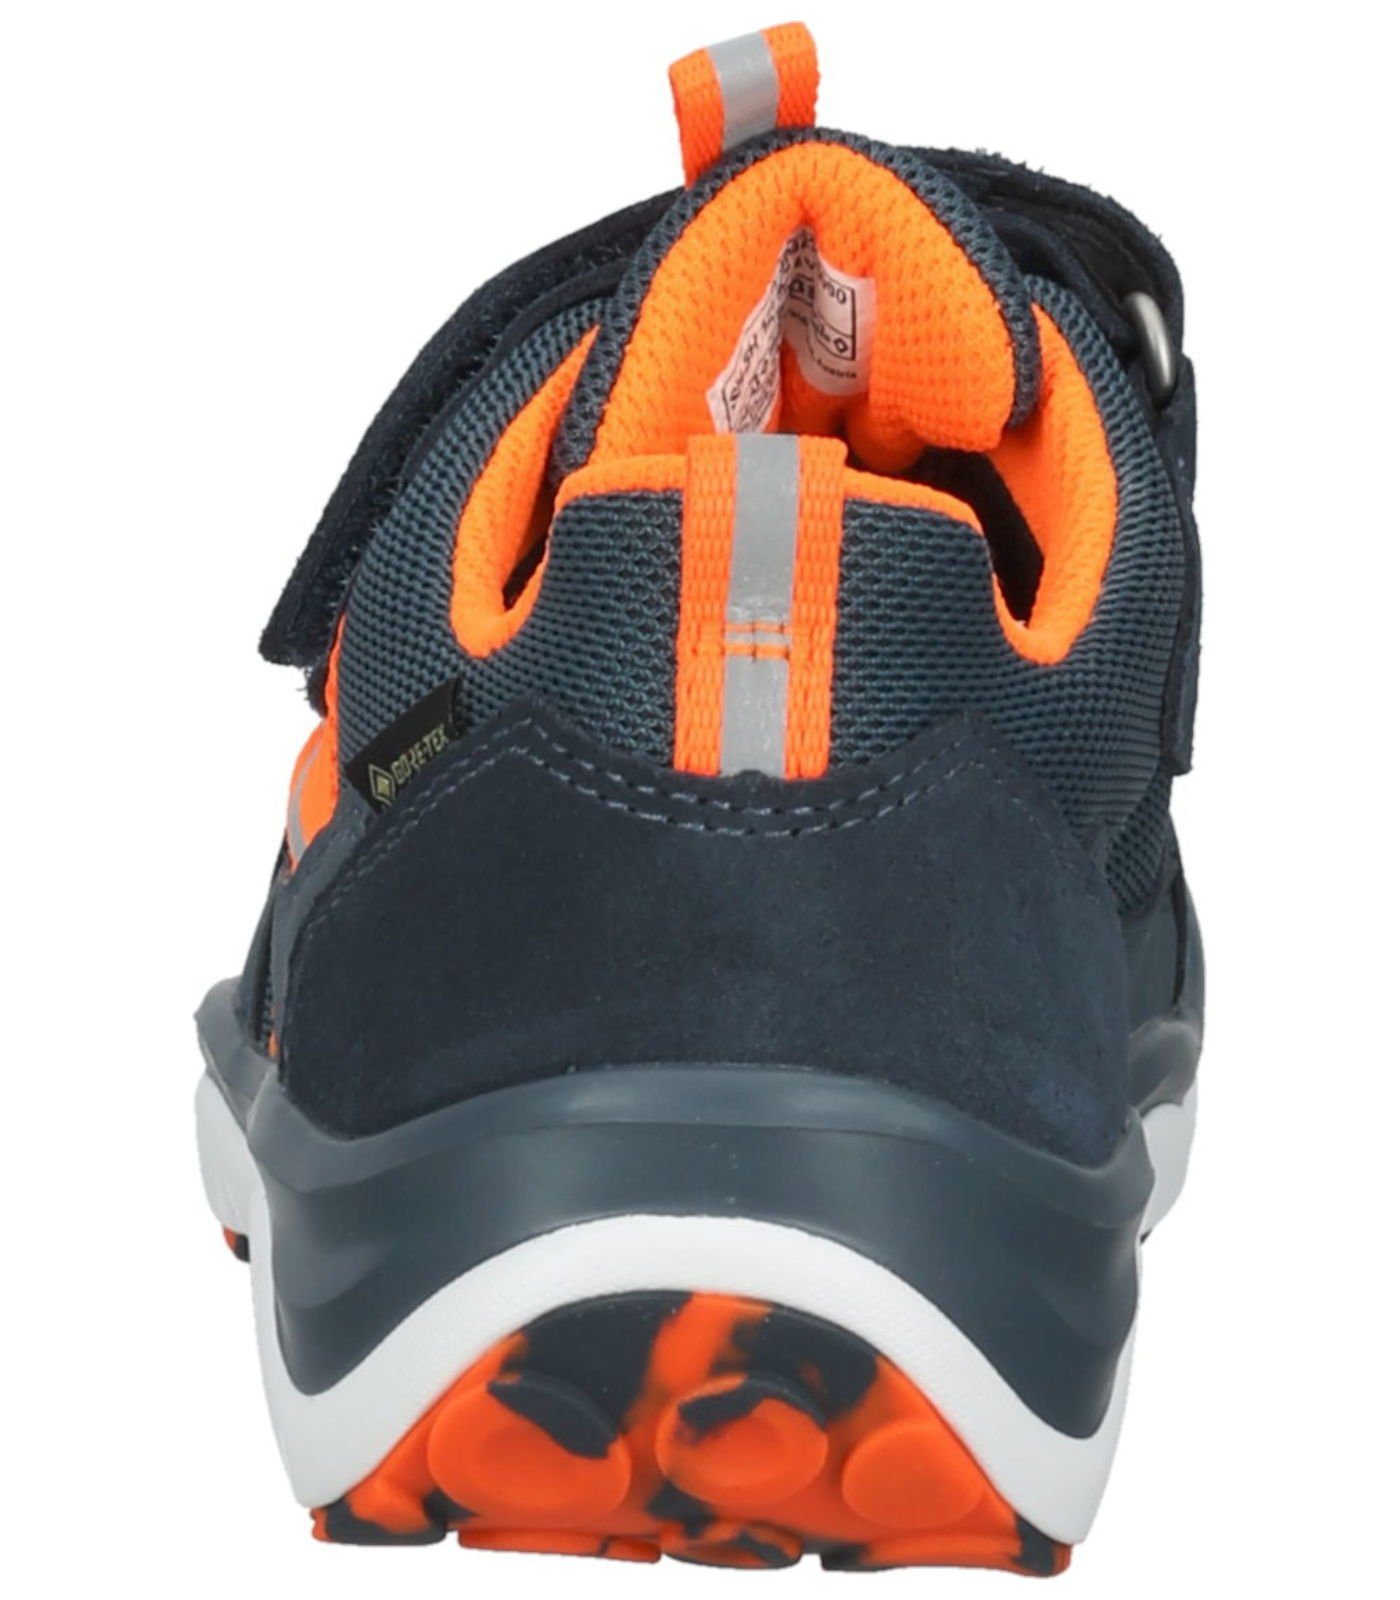 Sneaker Superfit Lederimitat/Textil Sneaker blau/orange